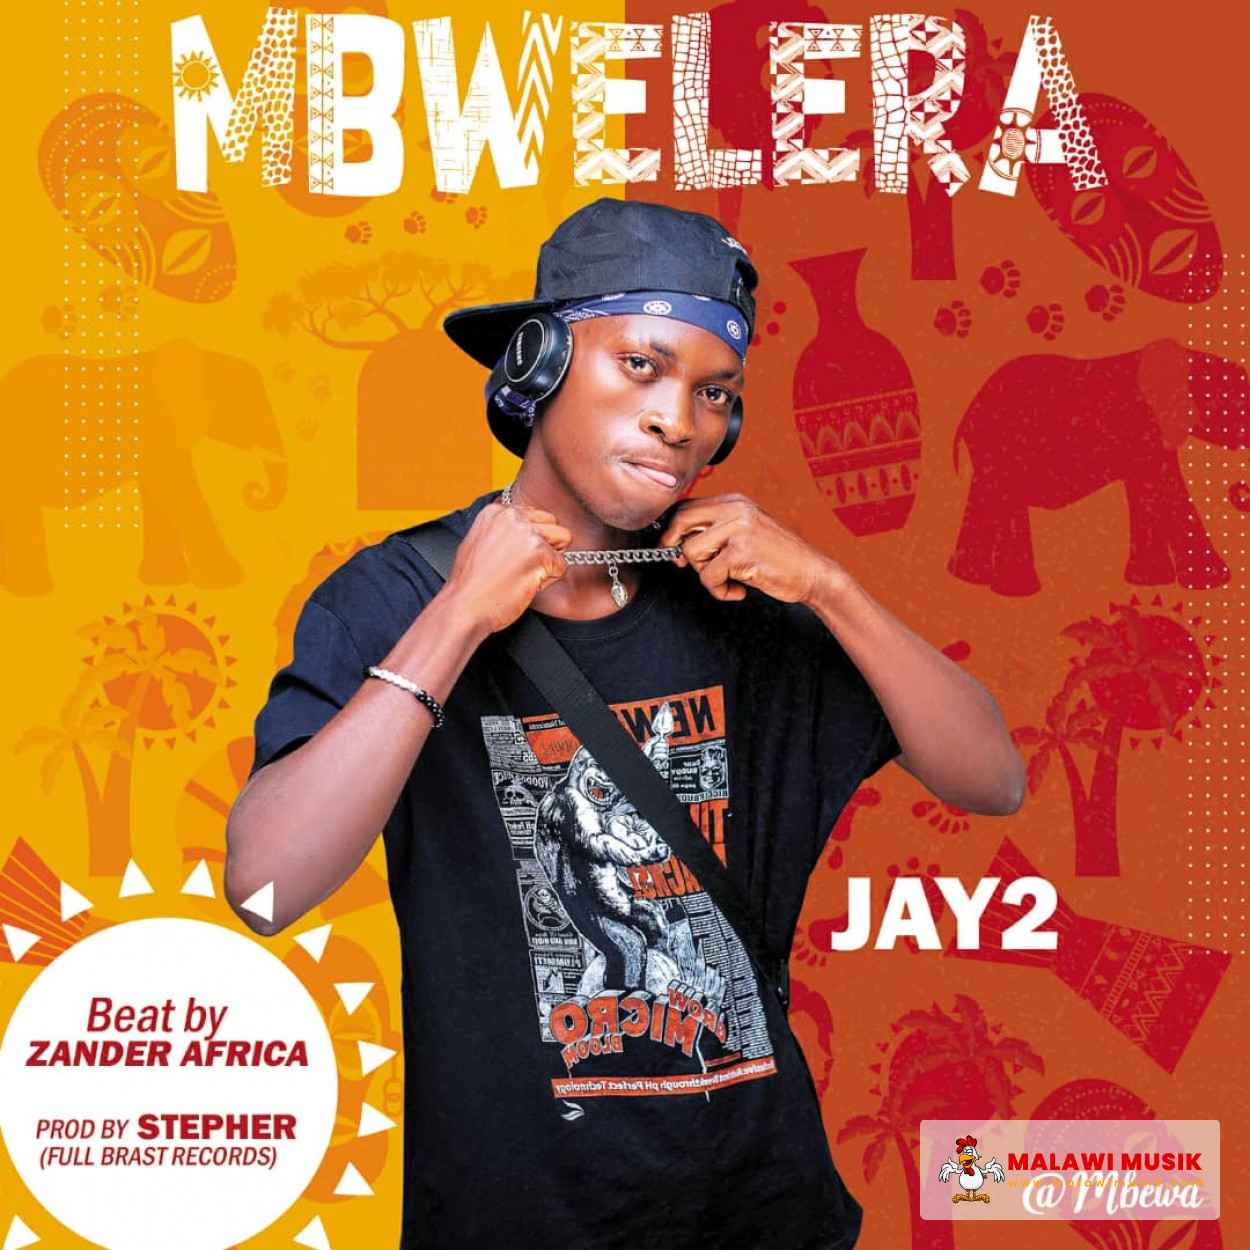 Jay2-Jay2 - Mbwelera (Prod. Stepher)-song artwork cover